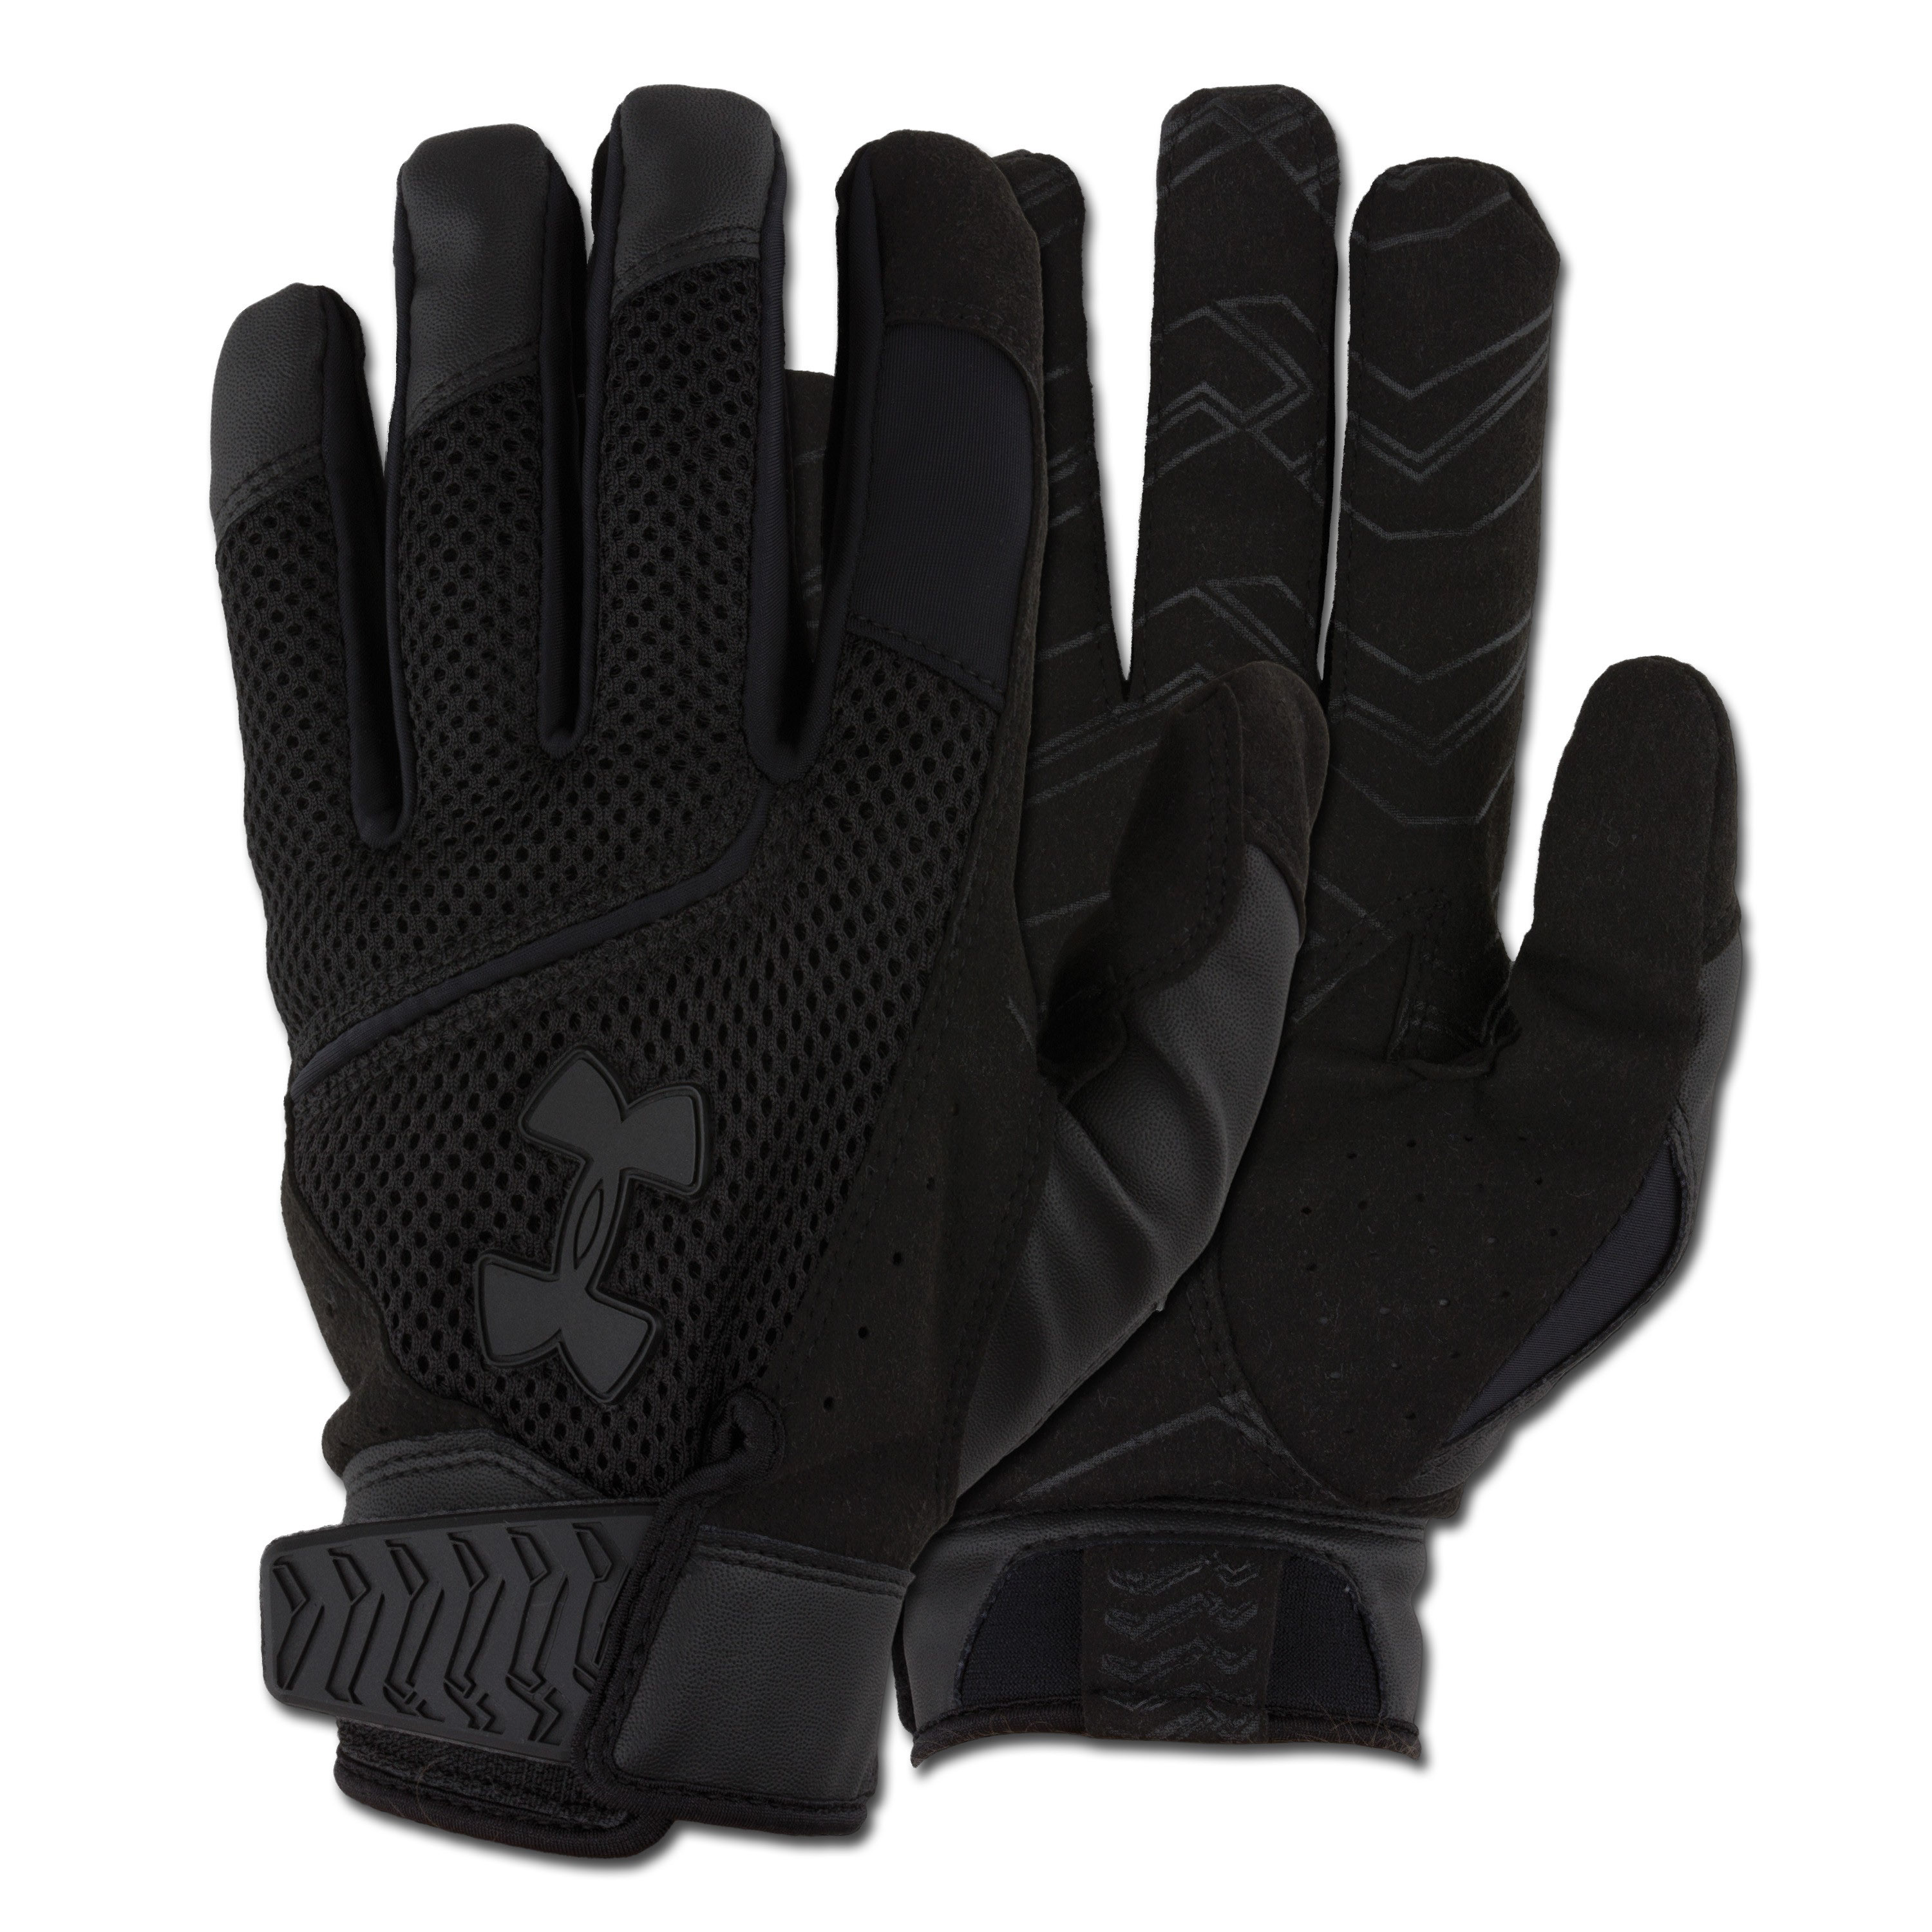 krab Alvast Beringstraat Under Armour Gloves Summer Blackout Tactical black | Under Armour Gloves  Summer Blackout Tactical black | Tactical Gloves | Gloves | Men | Clothing